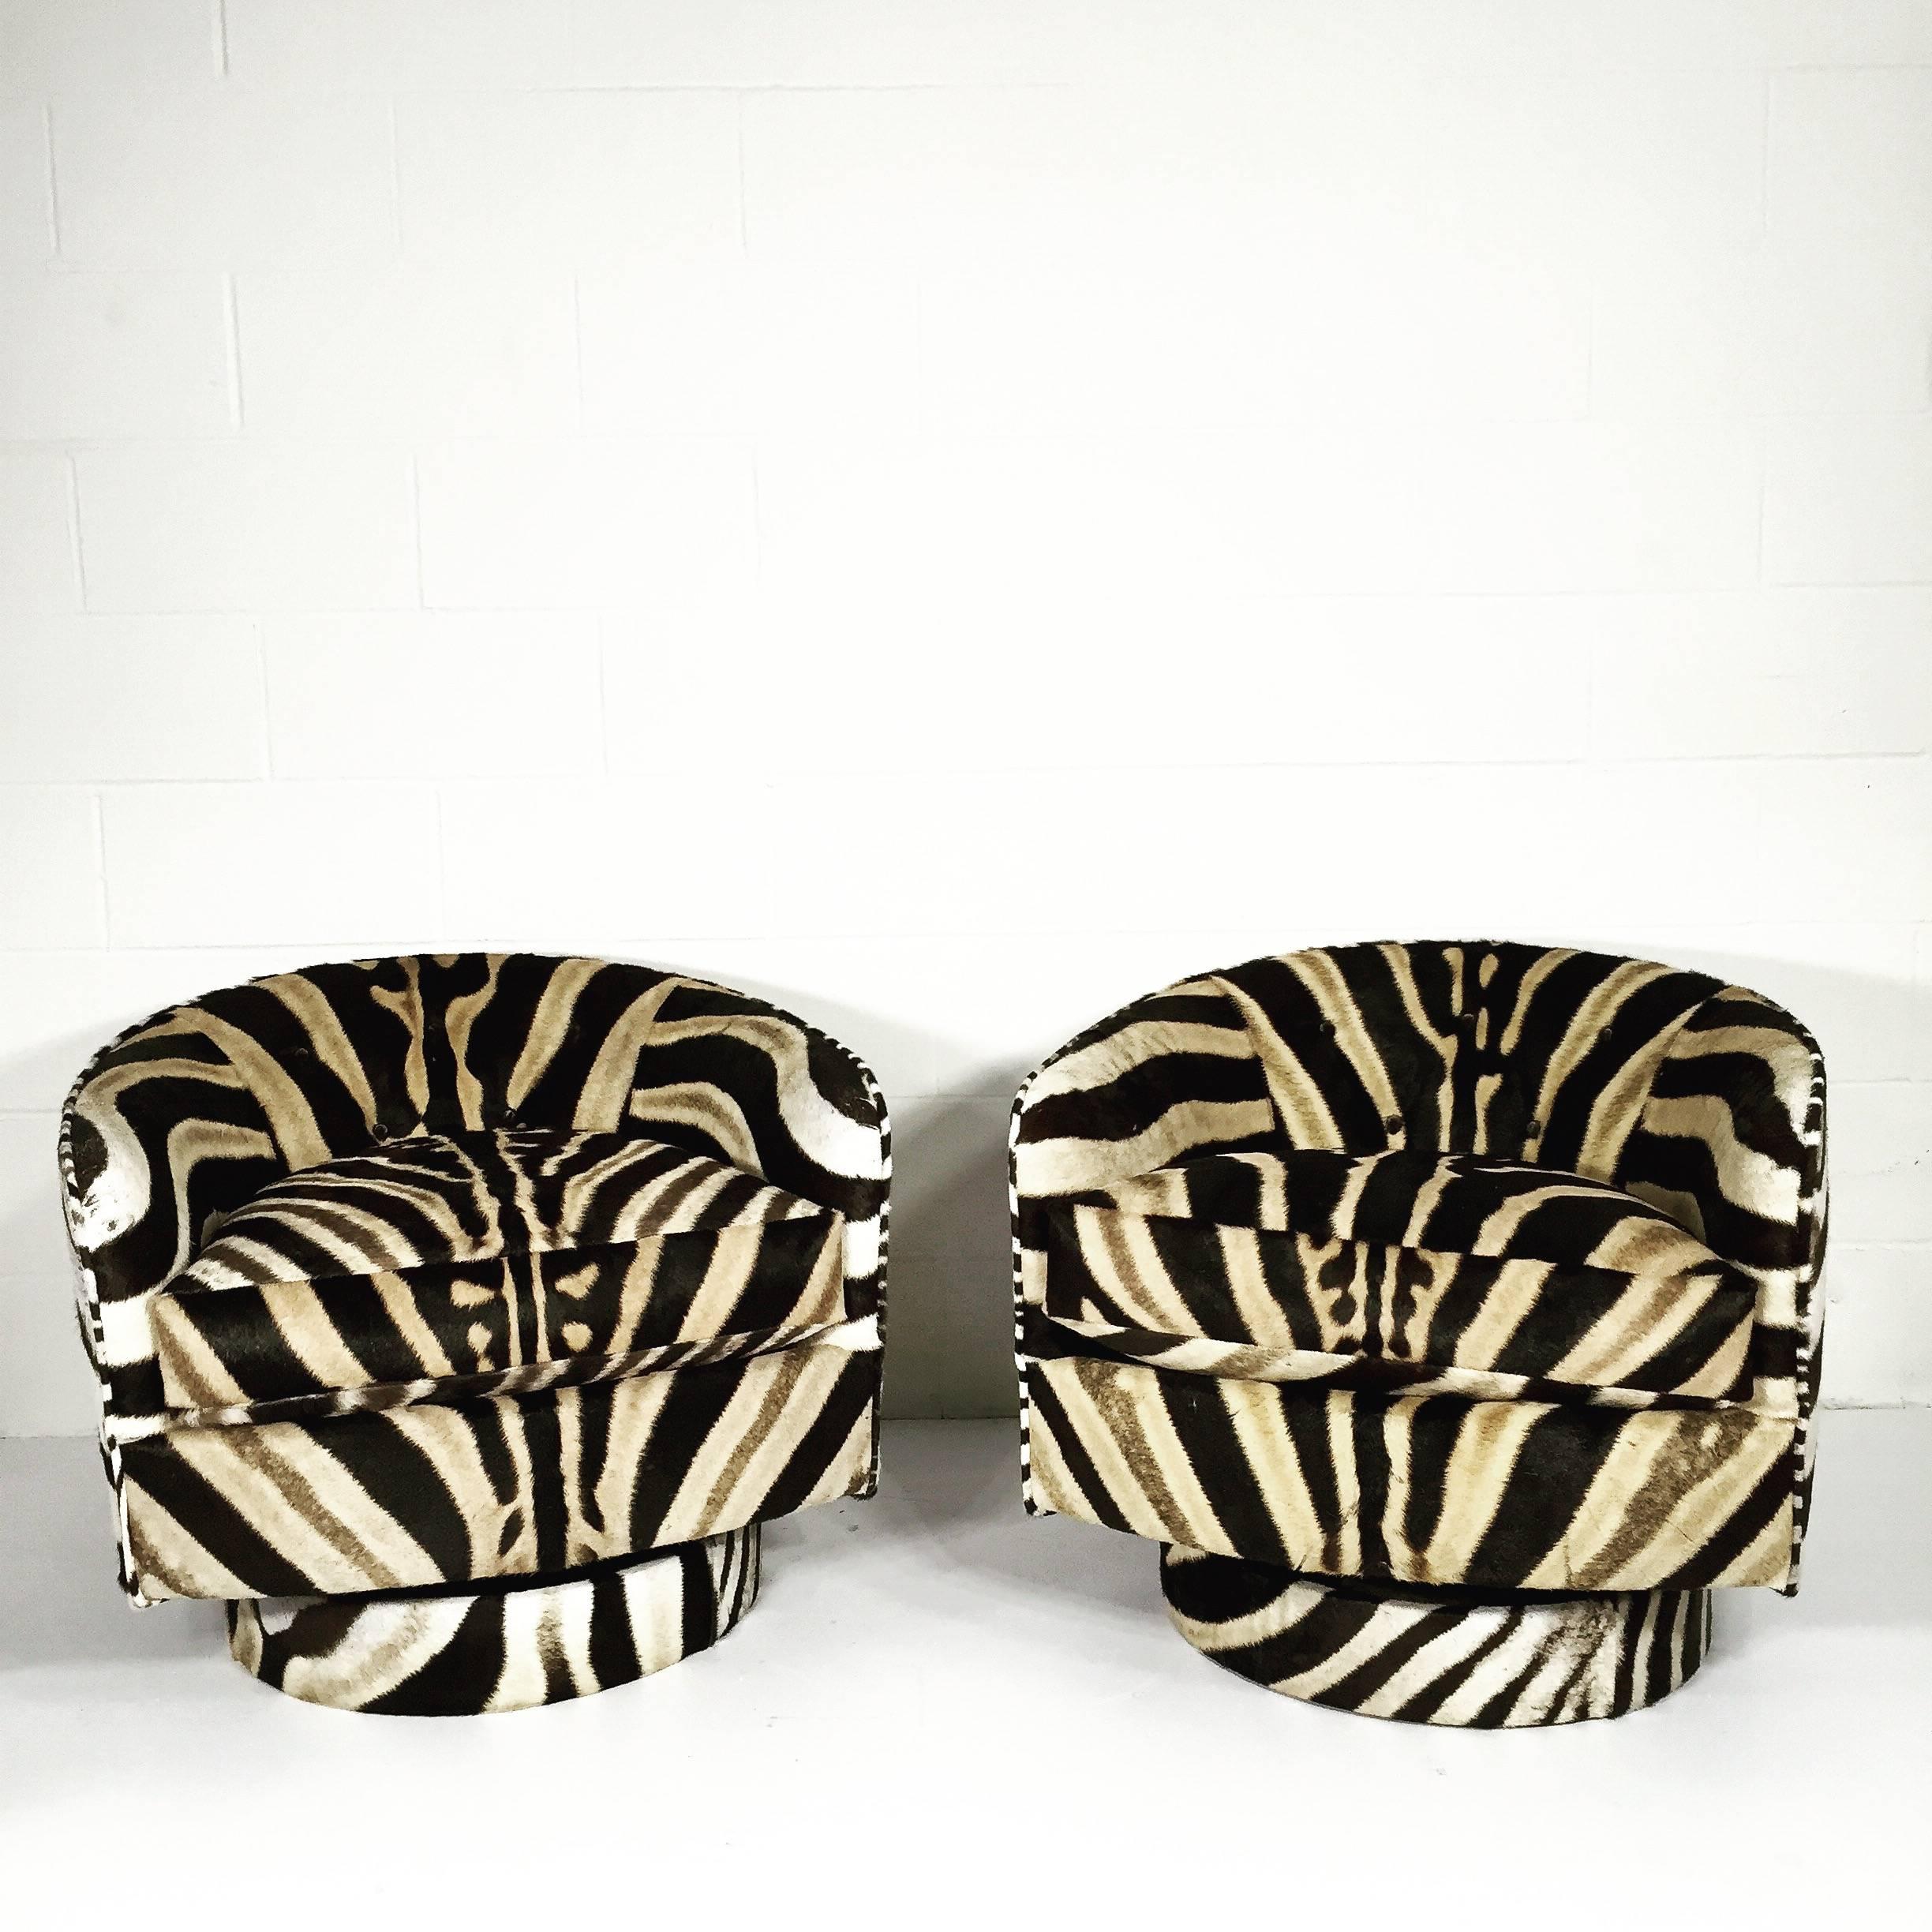 North American Milo Baughman 360 Degree Swivel and Tilt Club Chairs in Zebra Hide